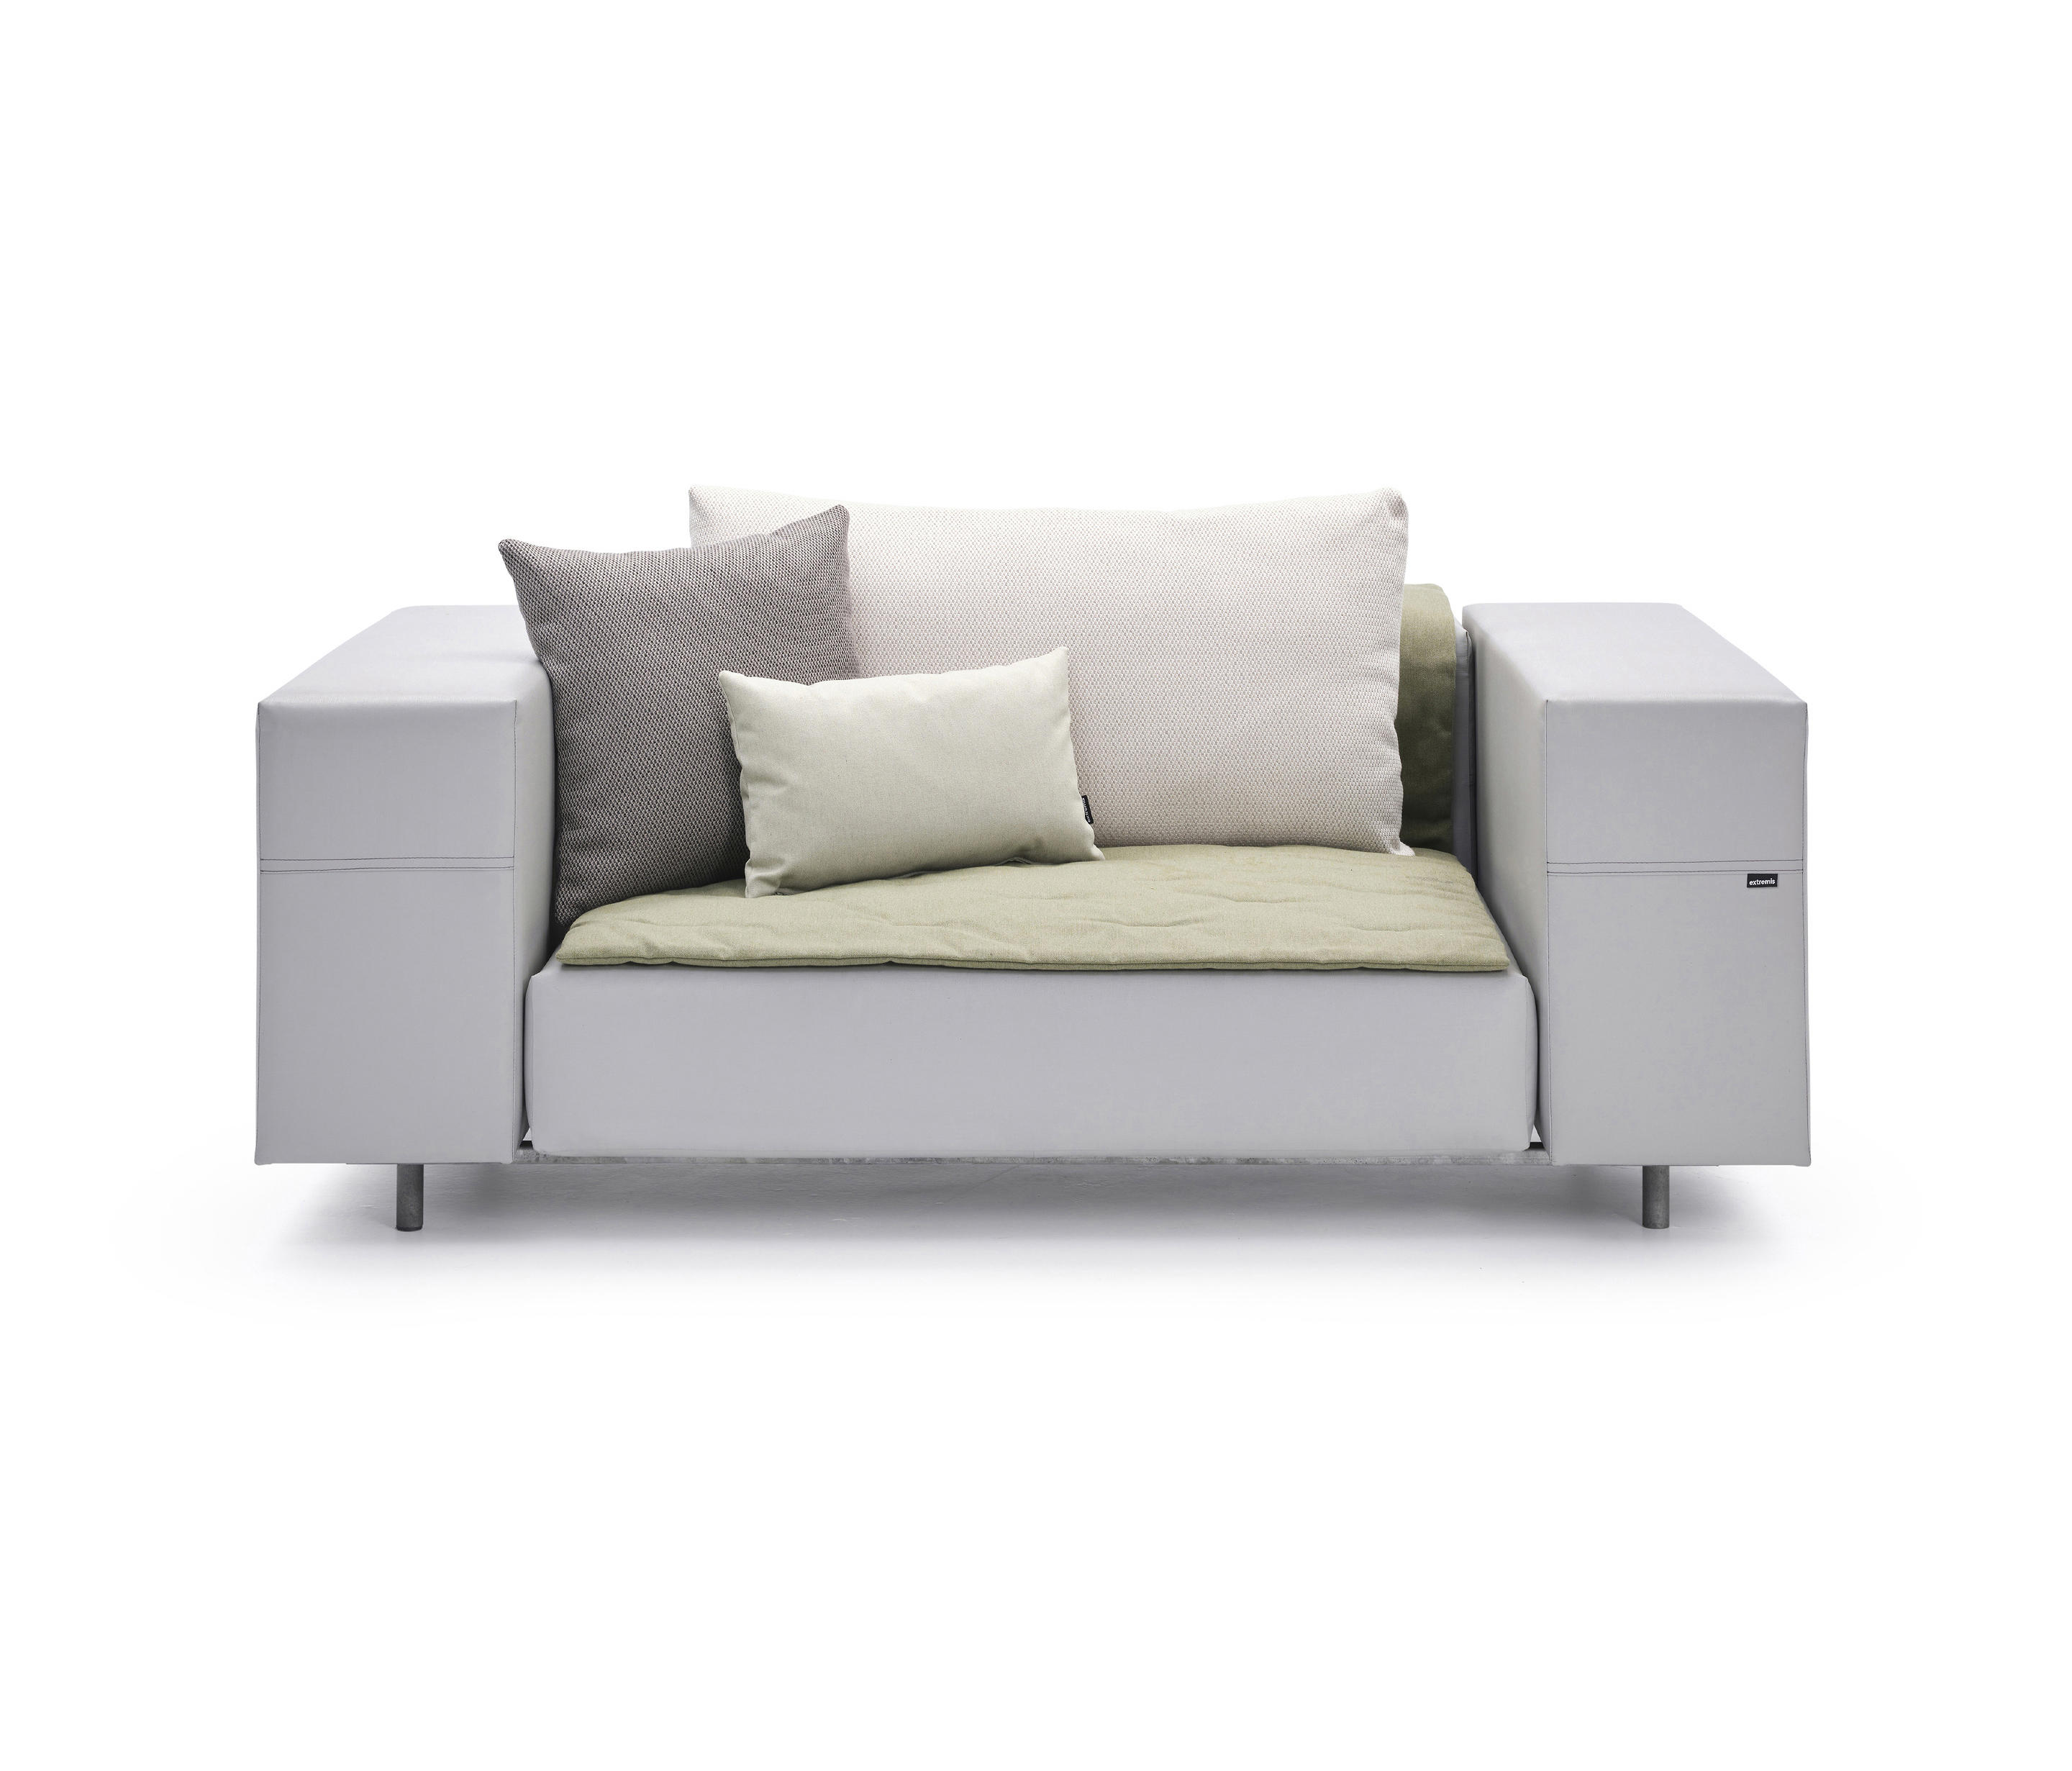 Walrus club chair & designer furniture | Architonic